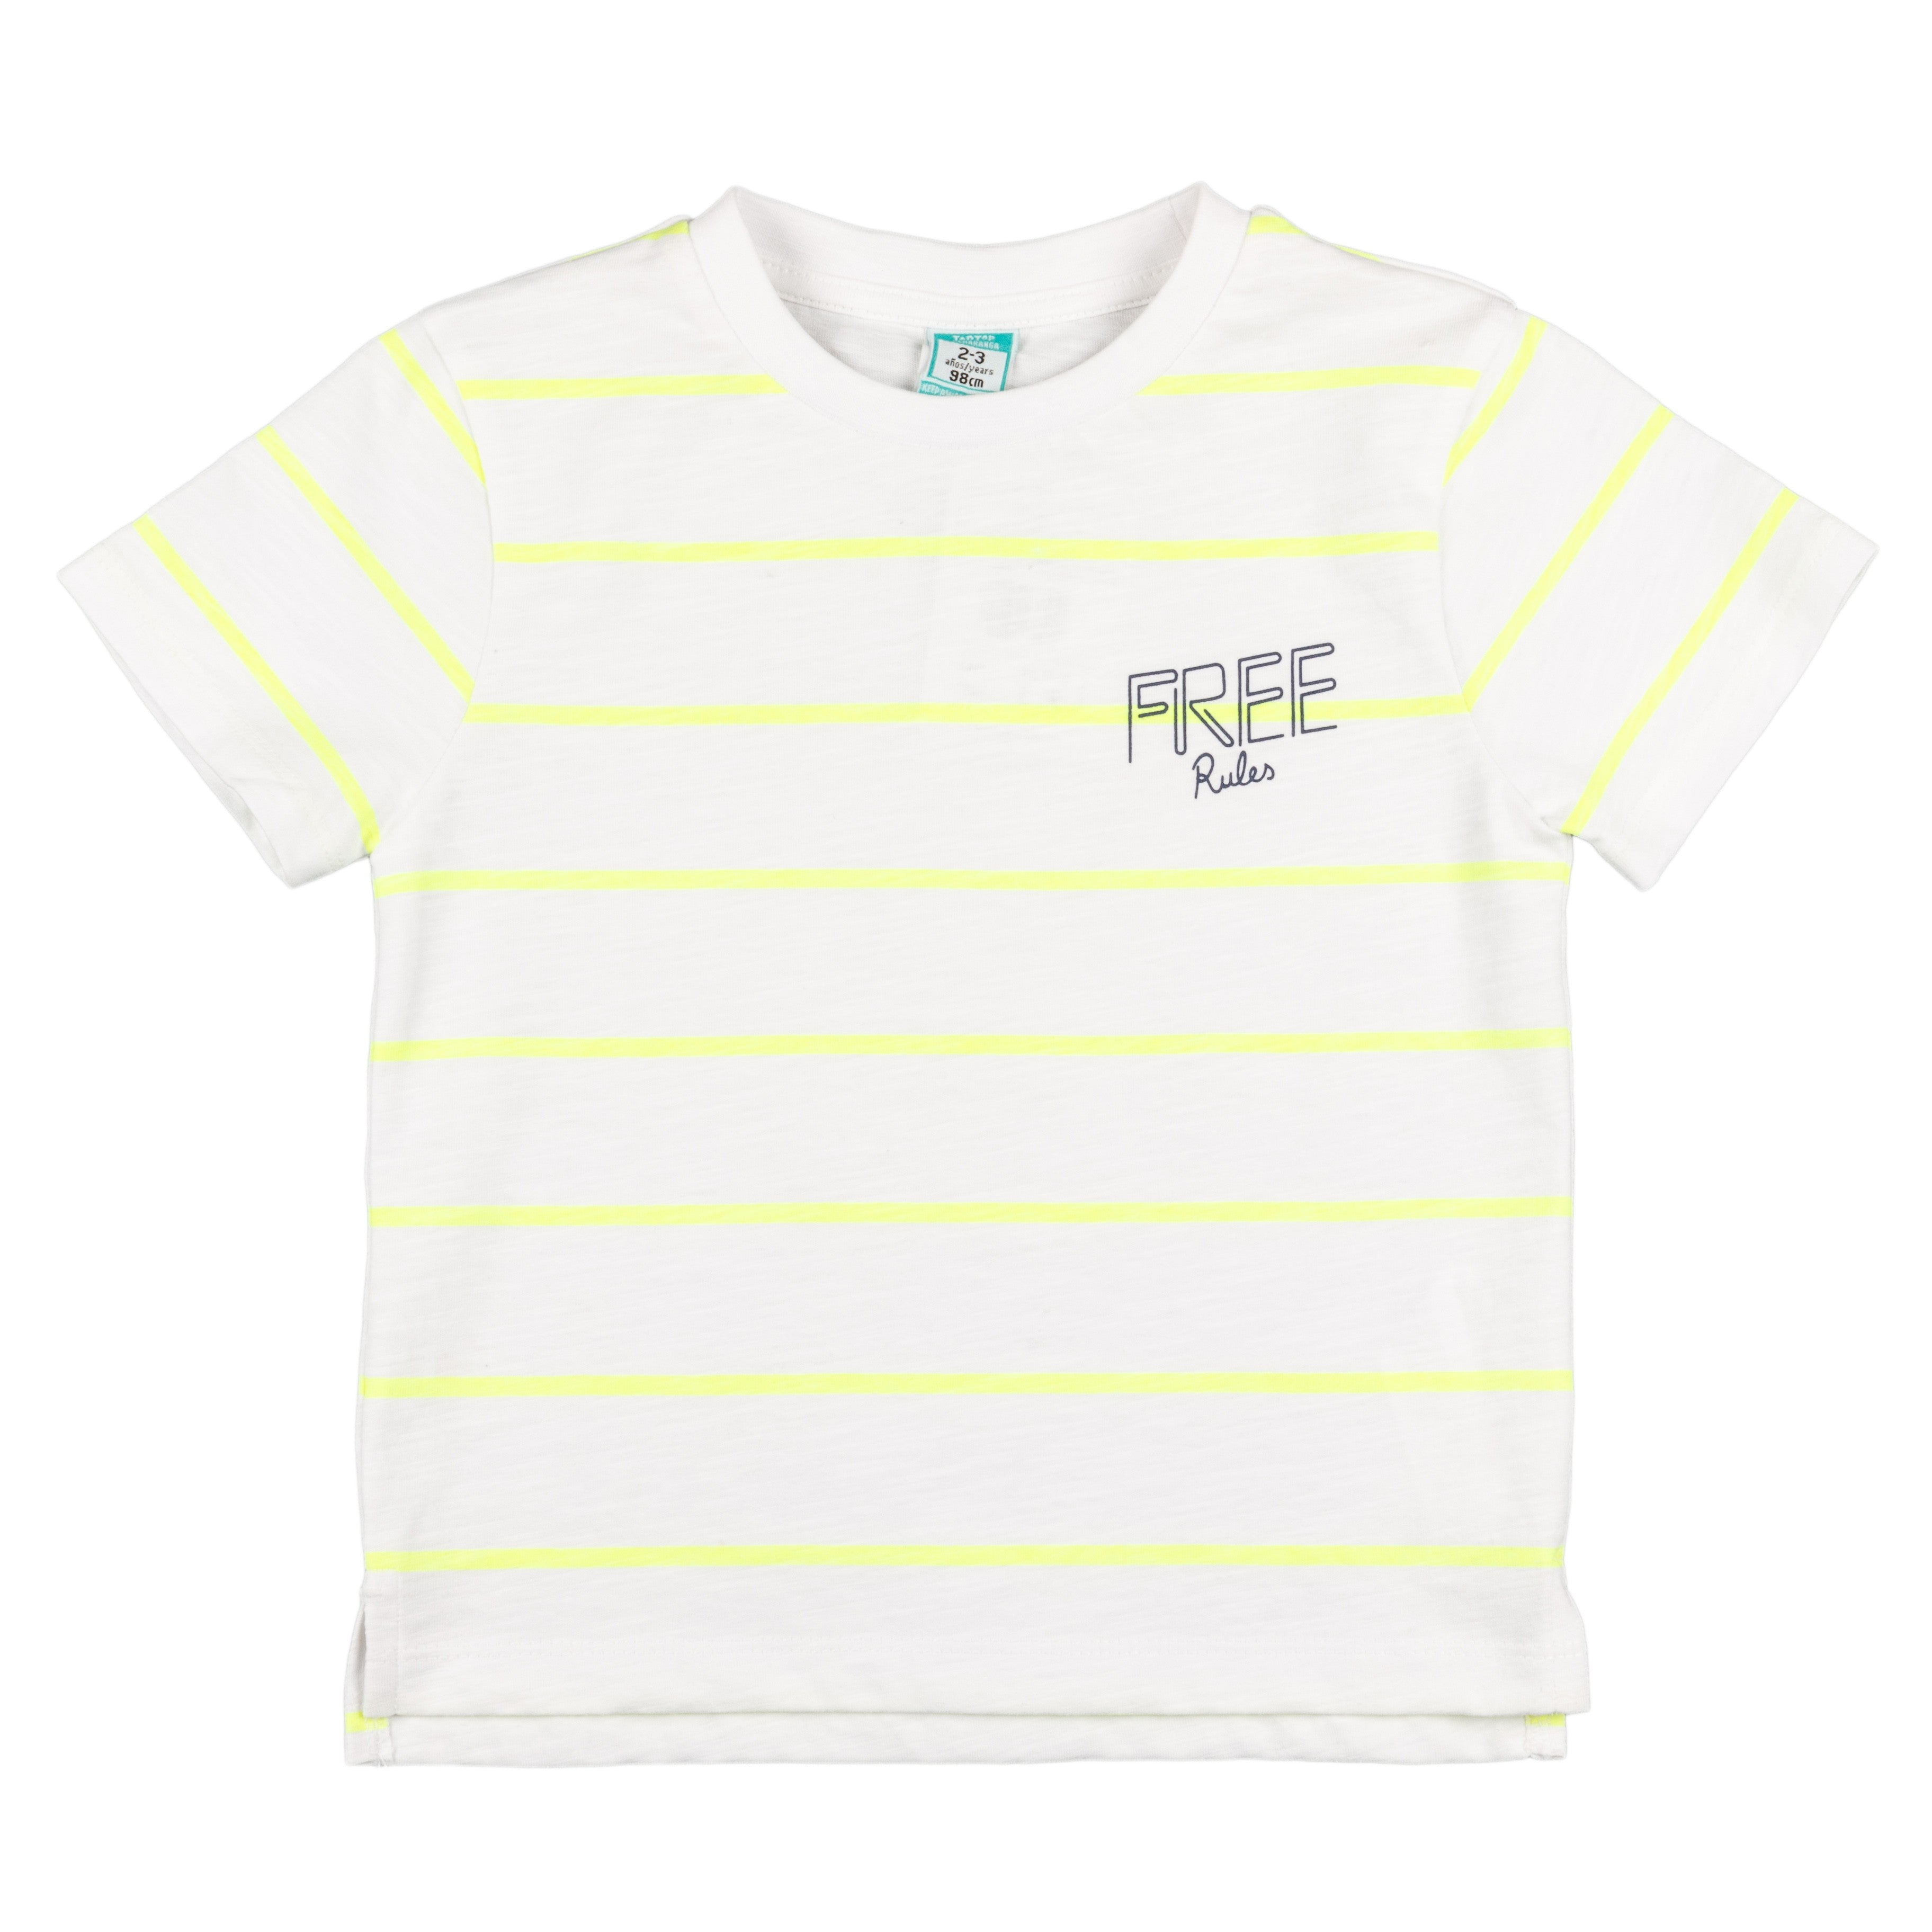 Camiseta de niño blanco VERANO/Outlet